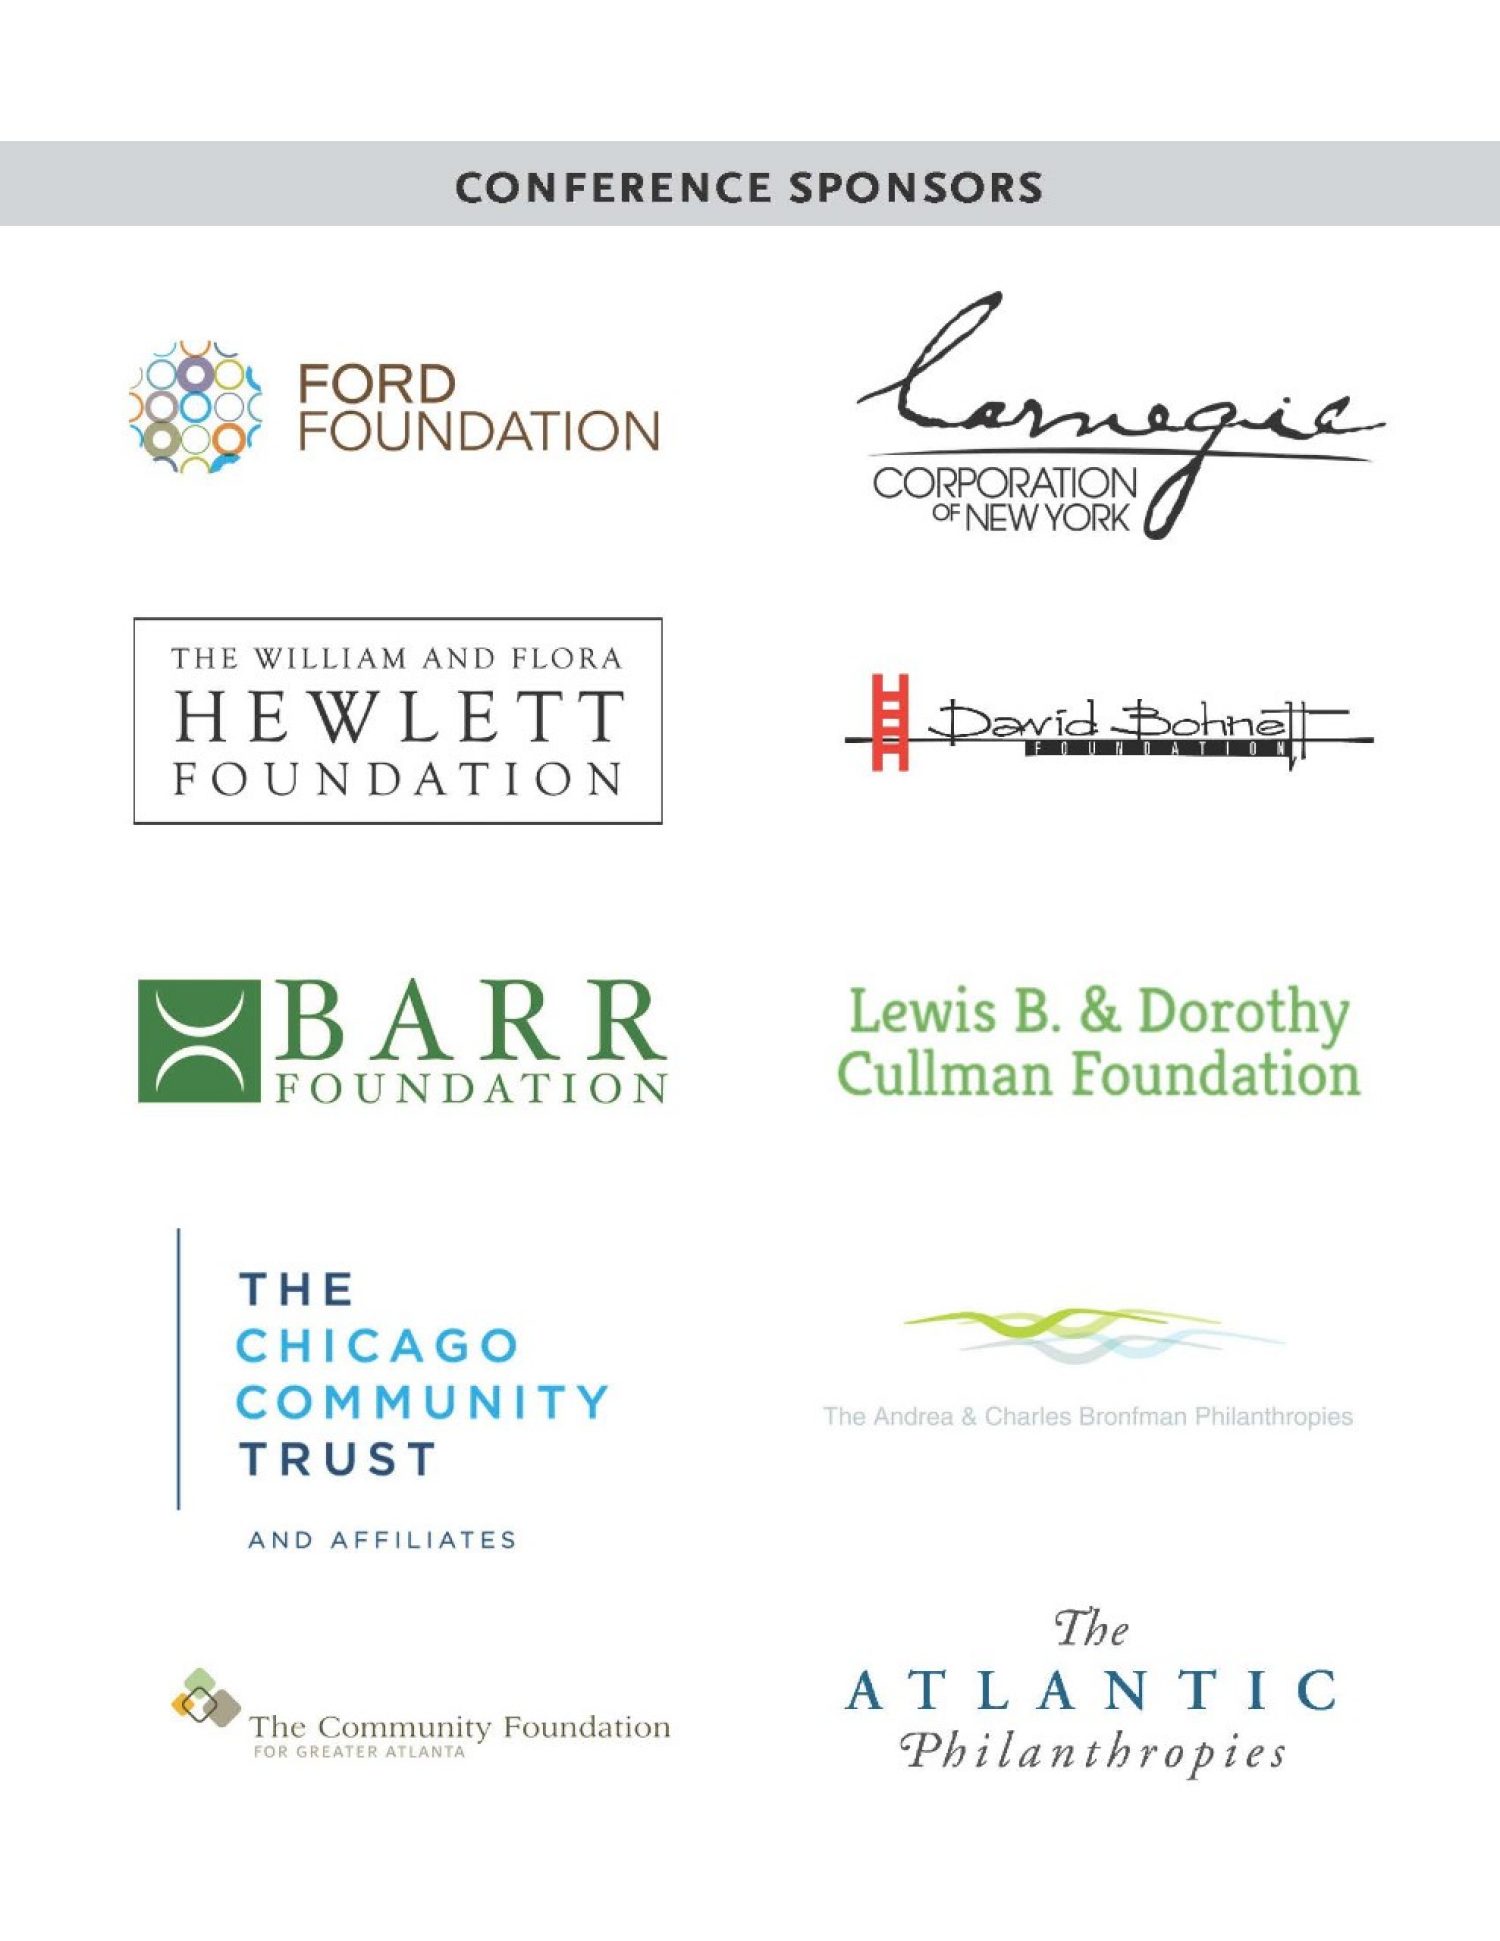 Conference sponsors: Ford Foundation, Barr Foundation, Rhode Island Foundation, Lewis B and Dorothy Cullman Foundation, William and Flora Hewlitt Foundation